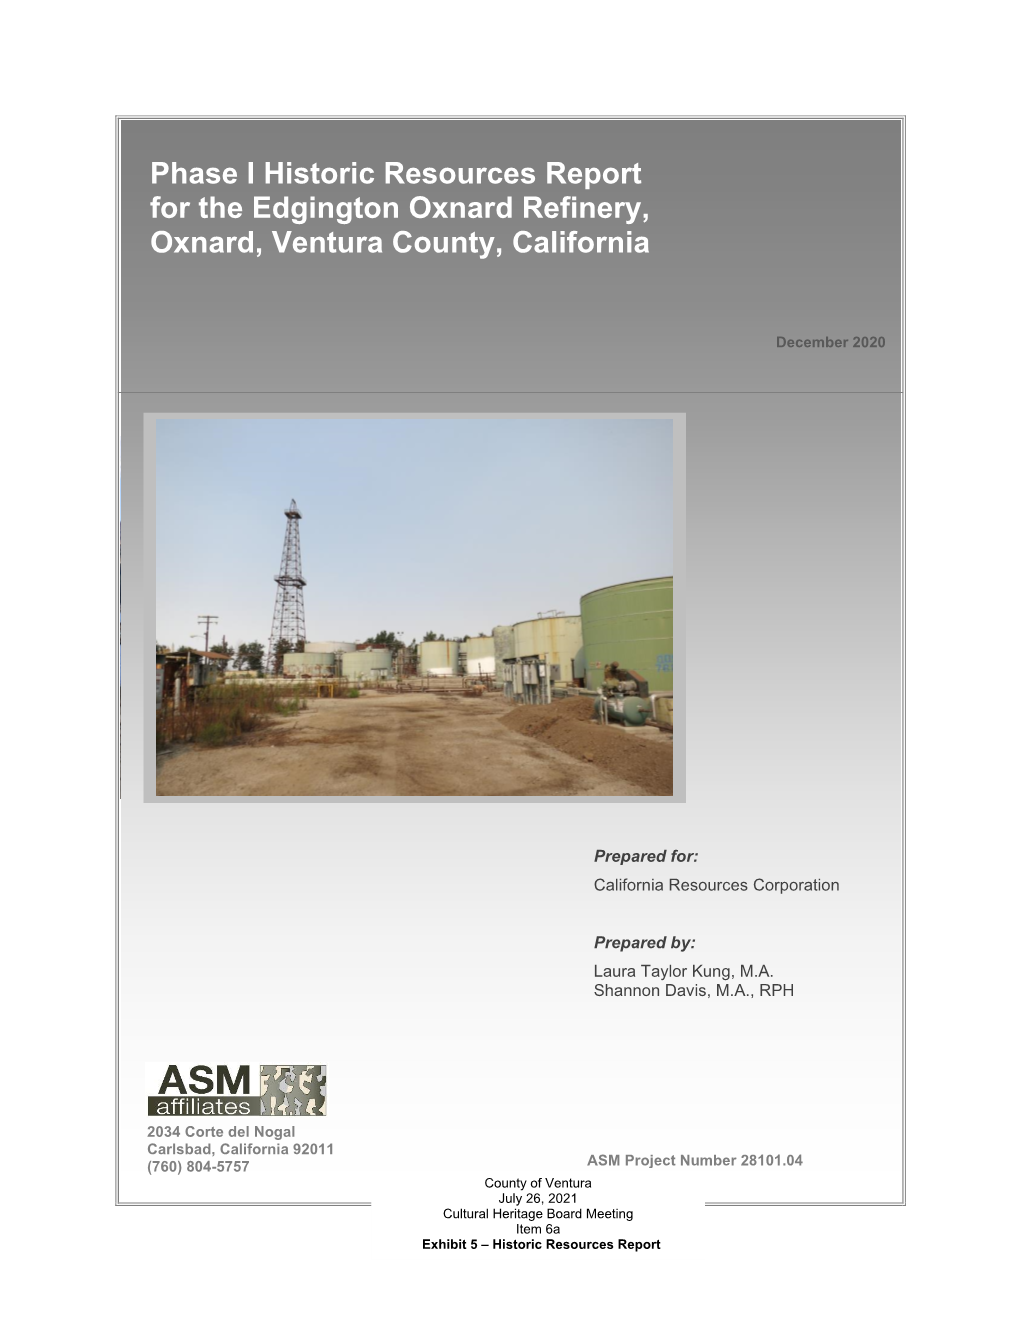 Historic Resources Report for the Edgington Oxnard Refinery, Oxnard, Ventura County, California